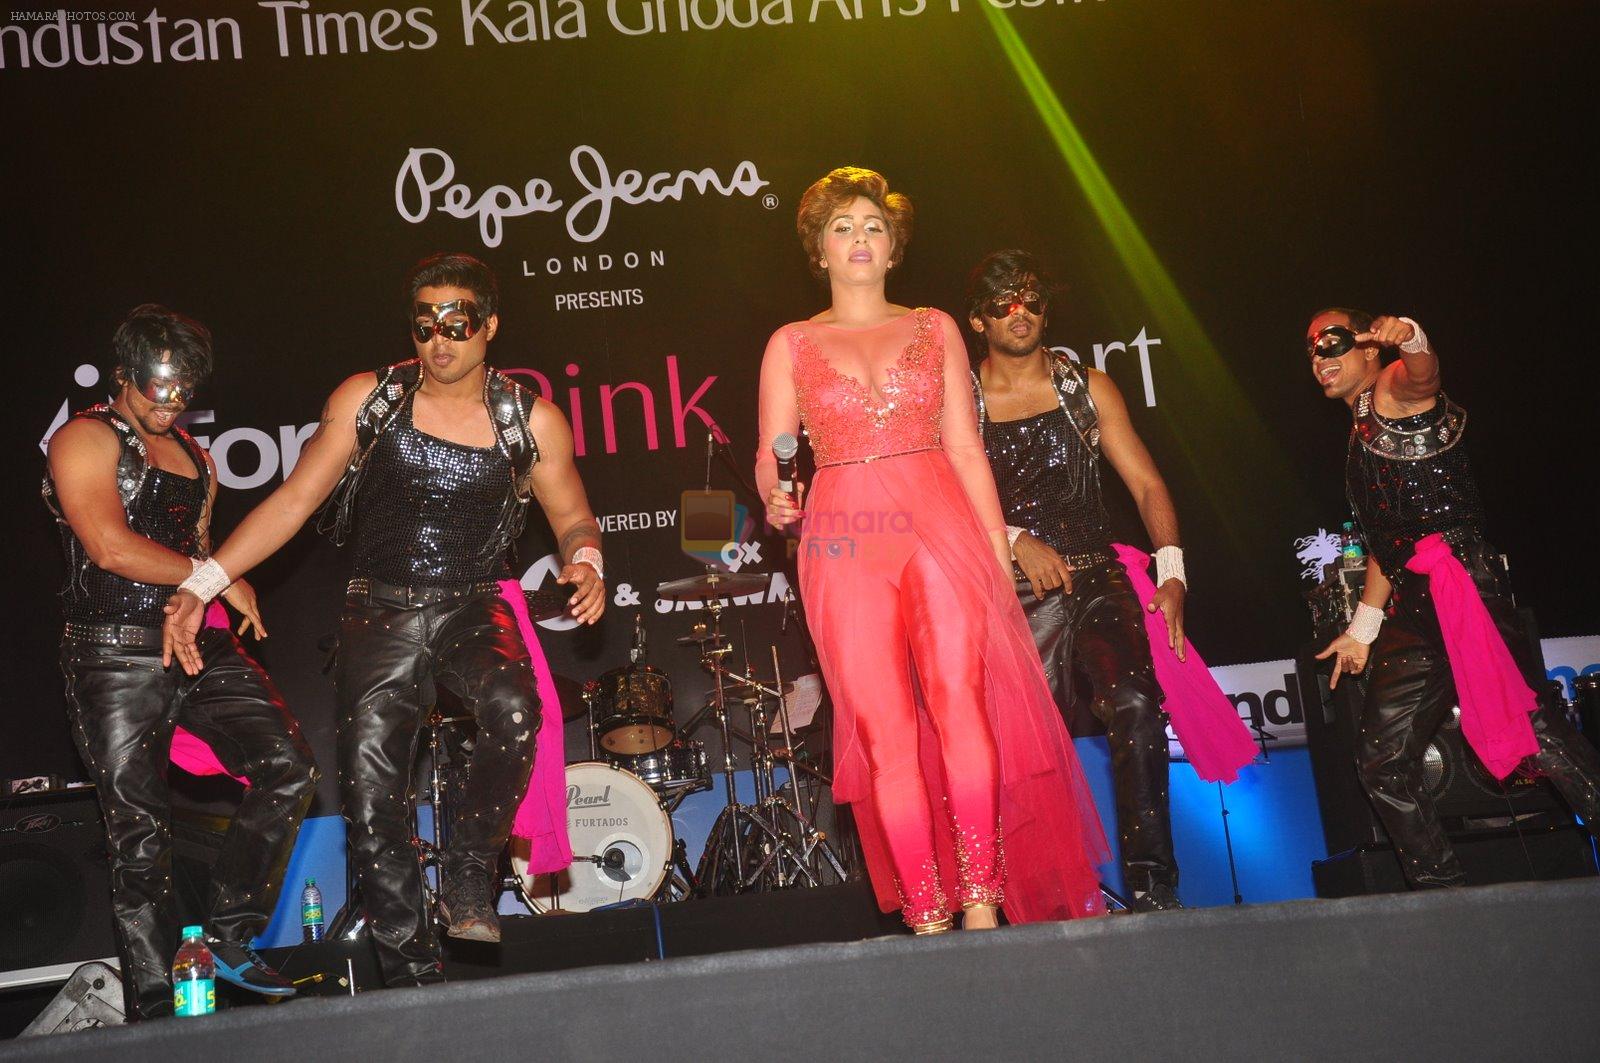 Neha Bhasin at Pepe Jeans music stage at Kalaghoda festival in Kalaghoda, Mumbai on 14th Feb 2015